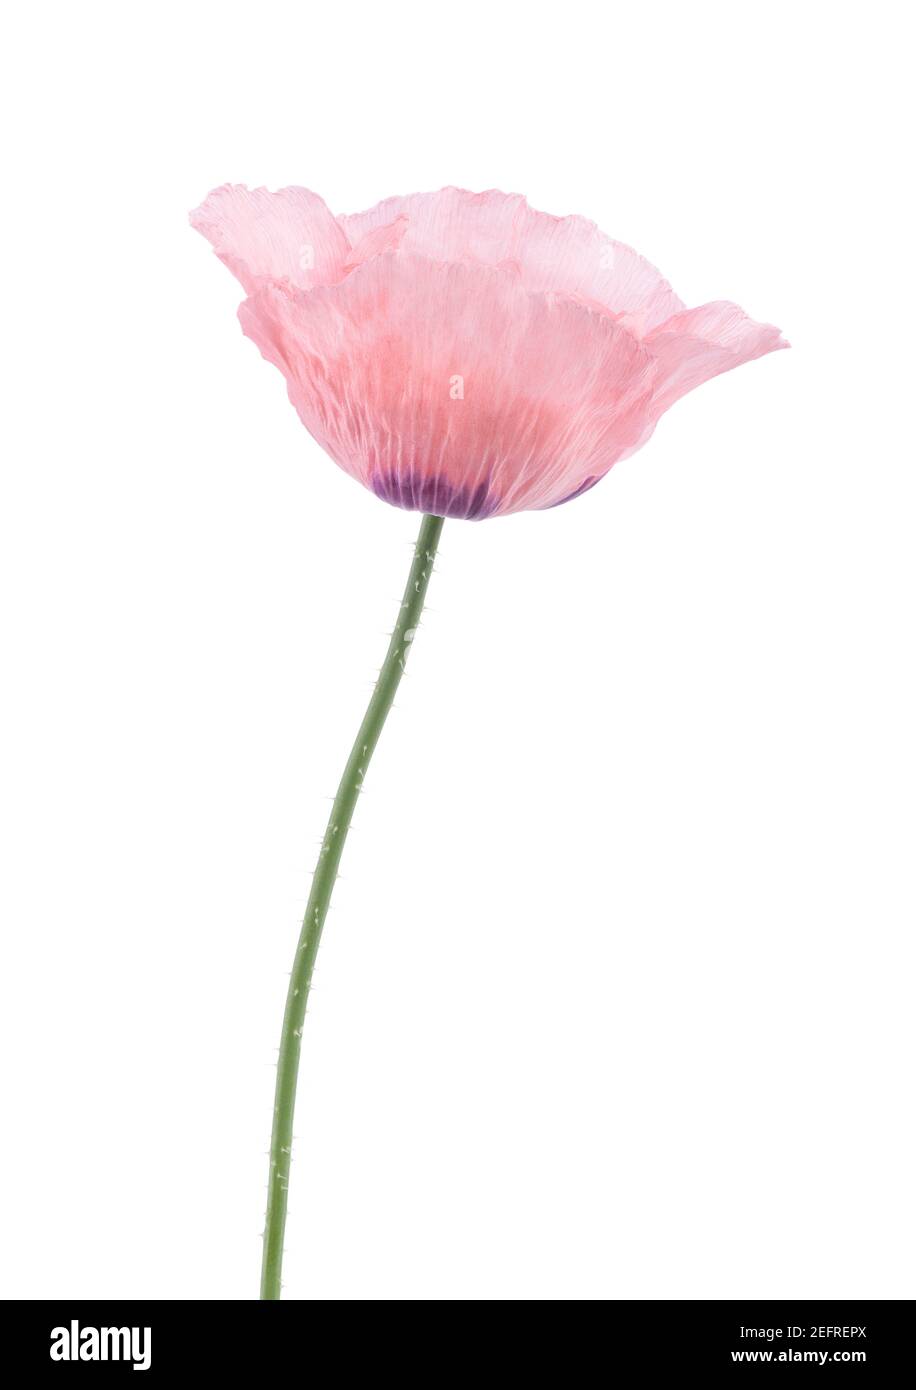 Pink Peony Poppy, closeup of a flower with translucent light pink petals on a stem. Papaver somniferum, Peoniflorum. Pink Paeony, Opium Poppy. Side vi Stock Photo